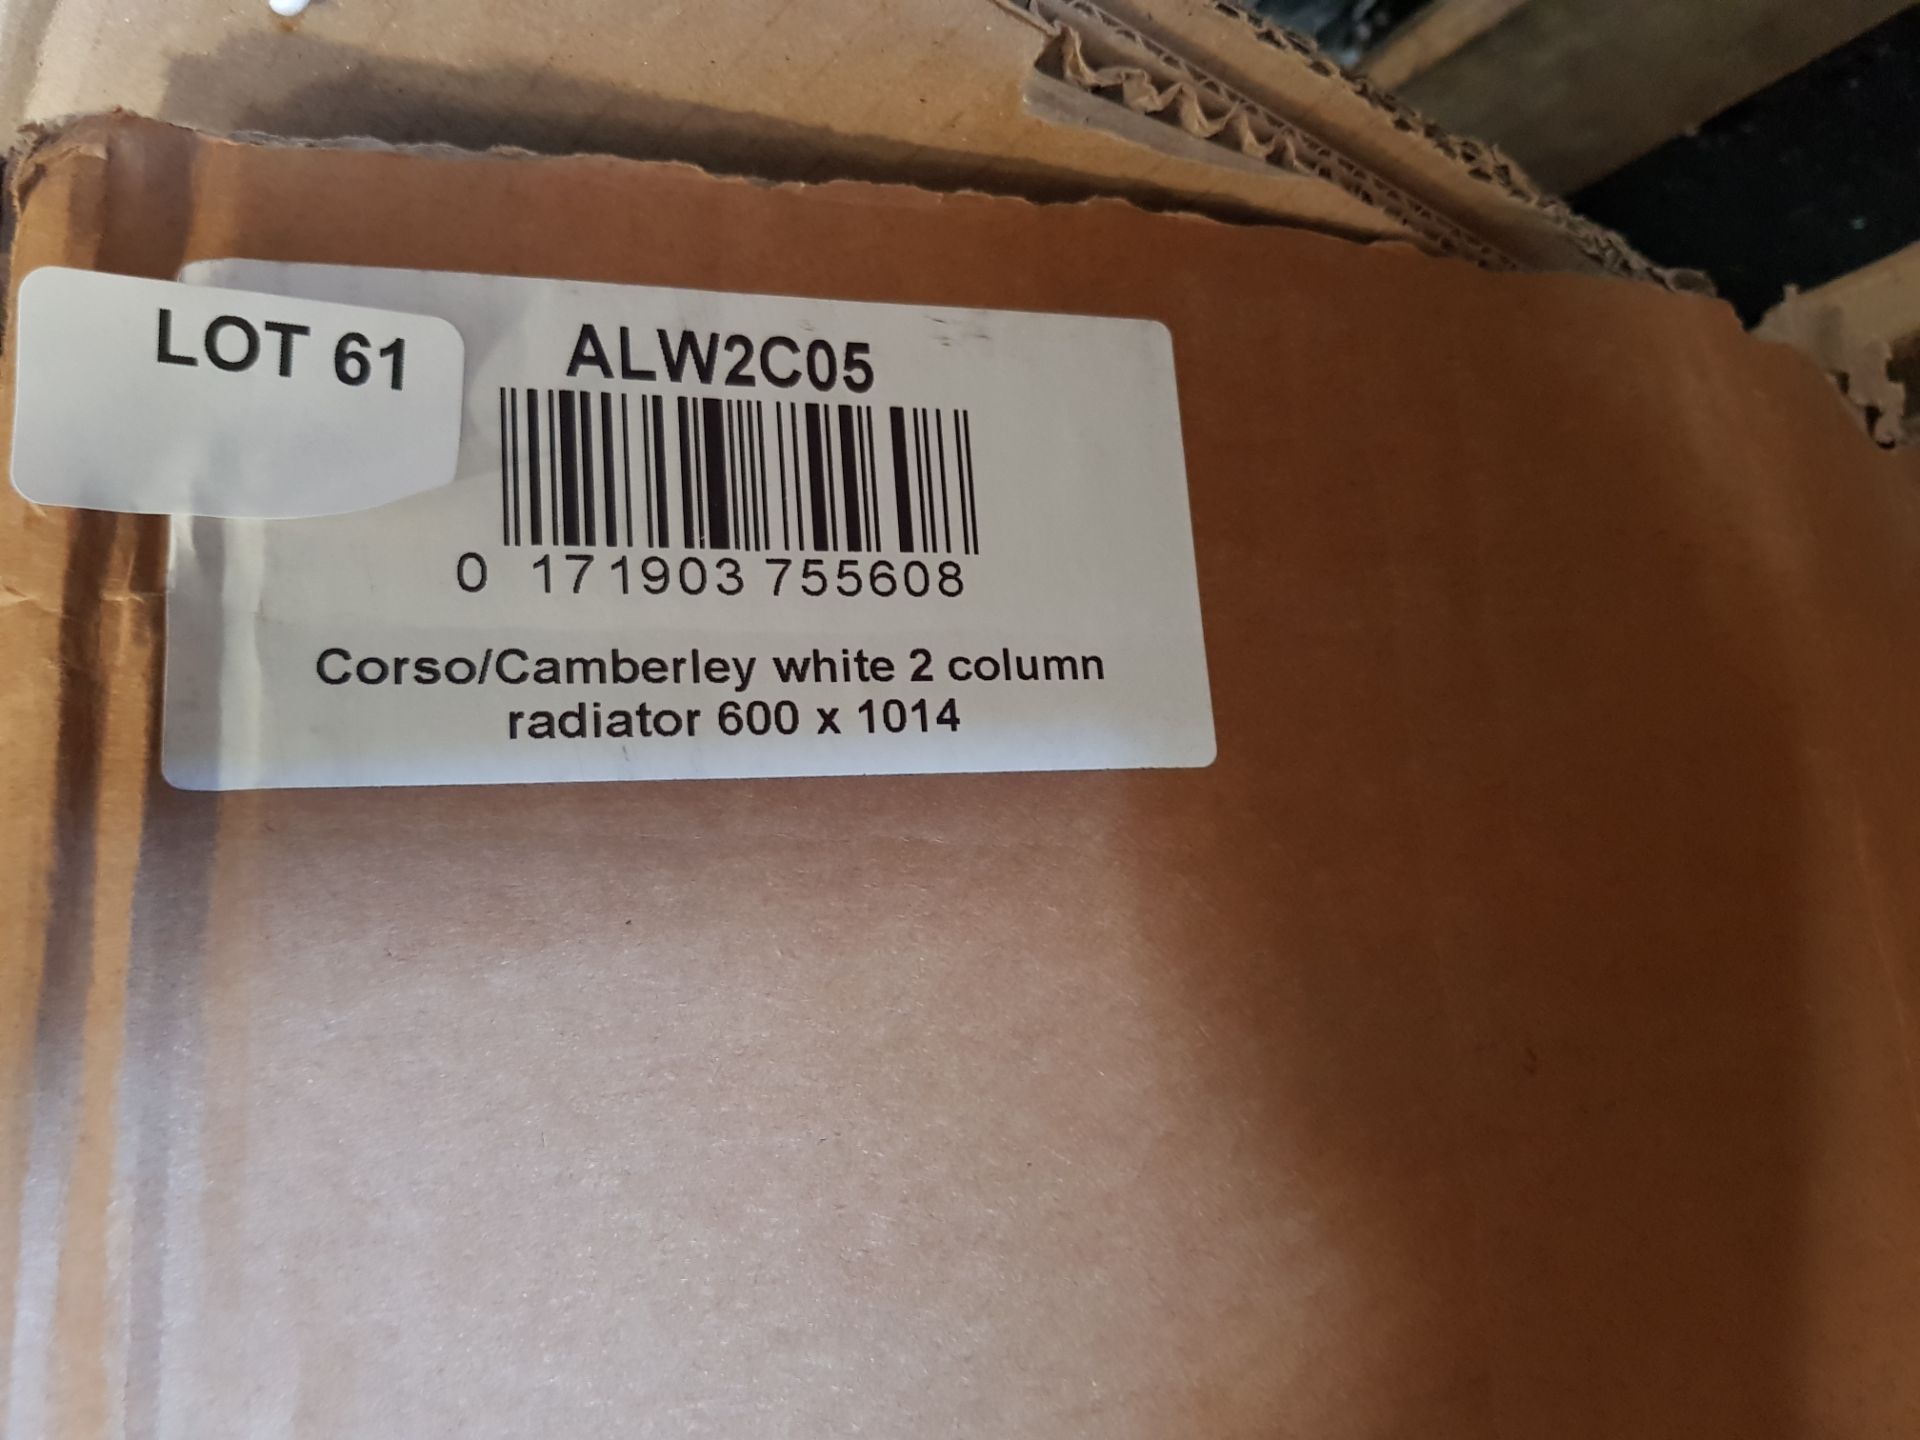 Corso/Camberley white 2 column radiator 600 x 1014 RRP £169 (ALW2C05) - Image 6 of 6